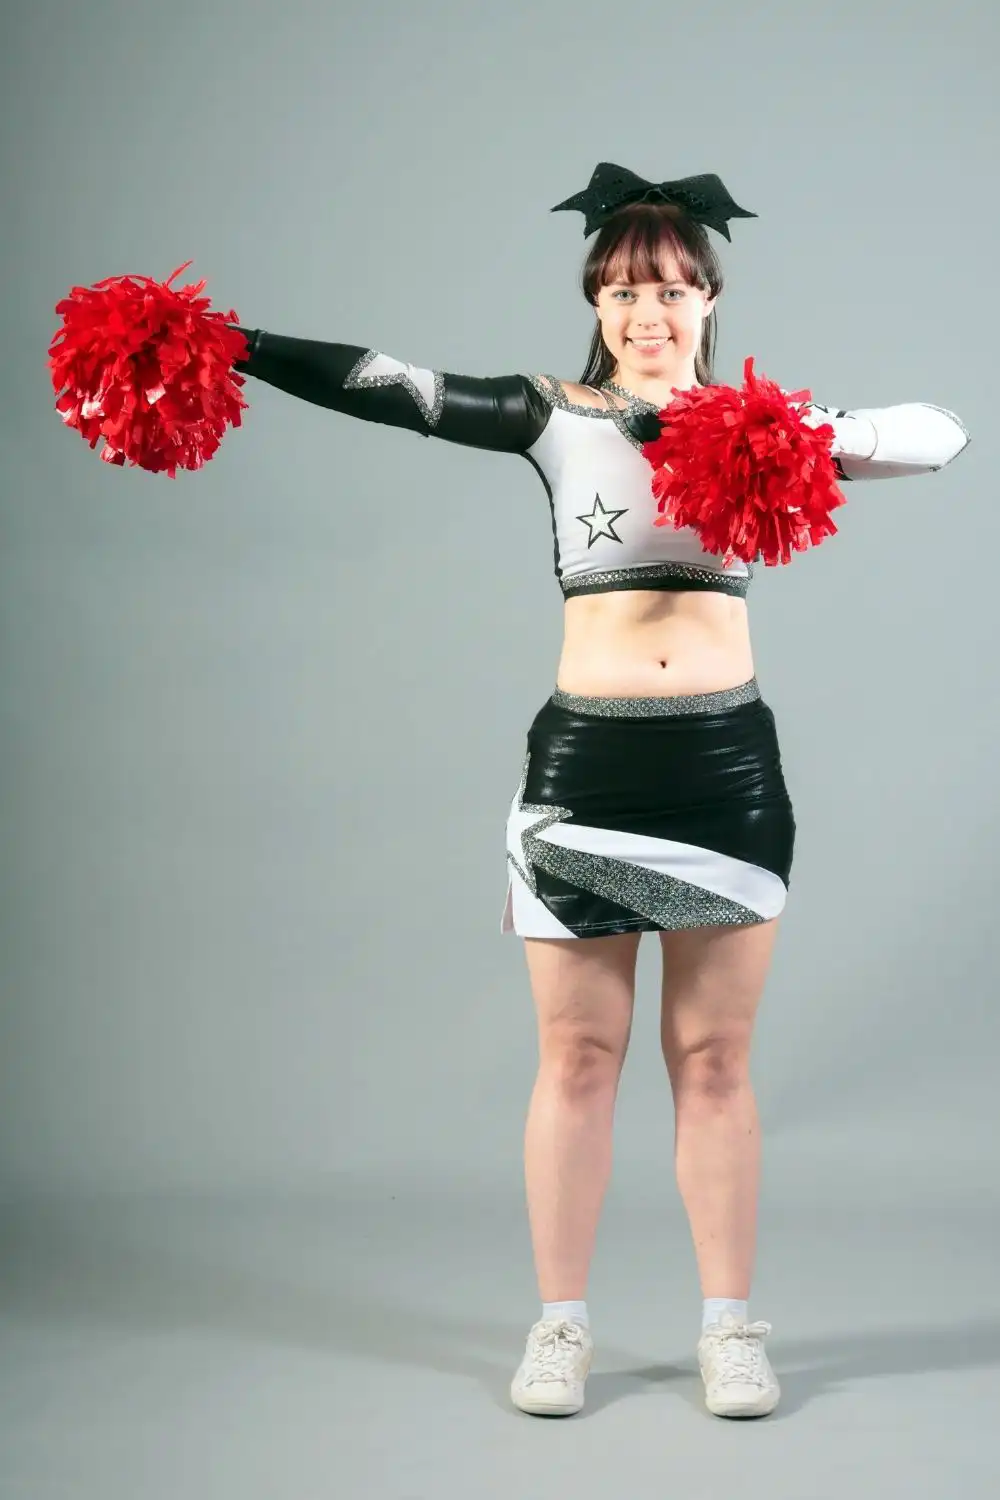 Cheerleader girl posing